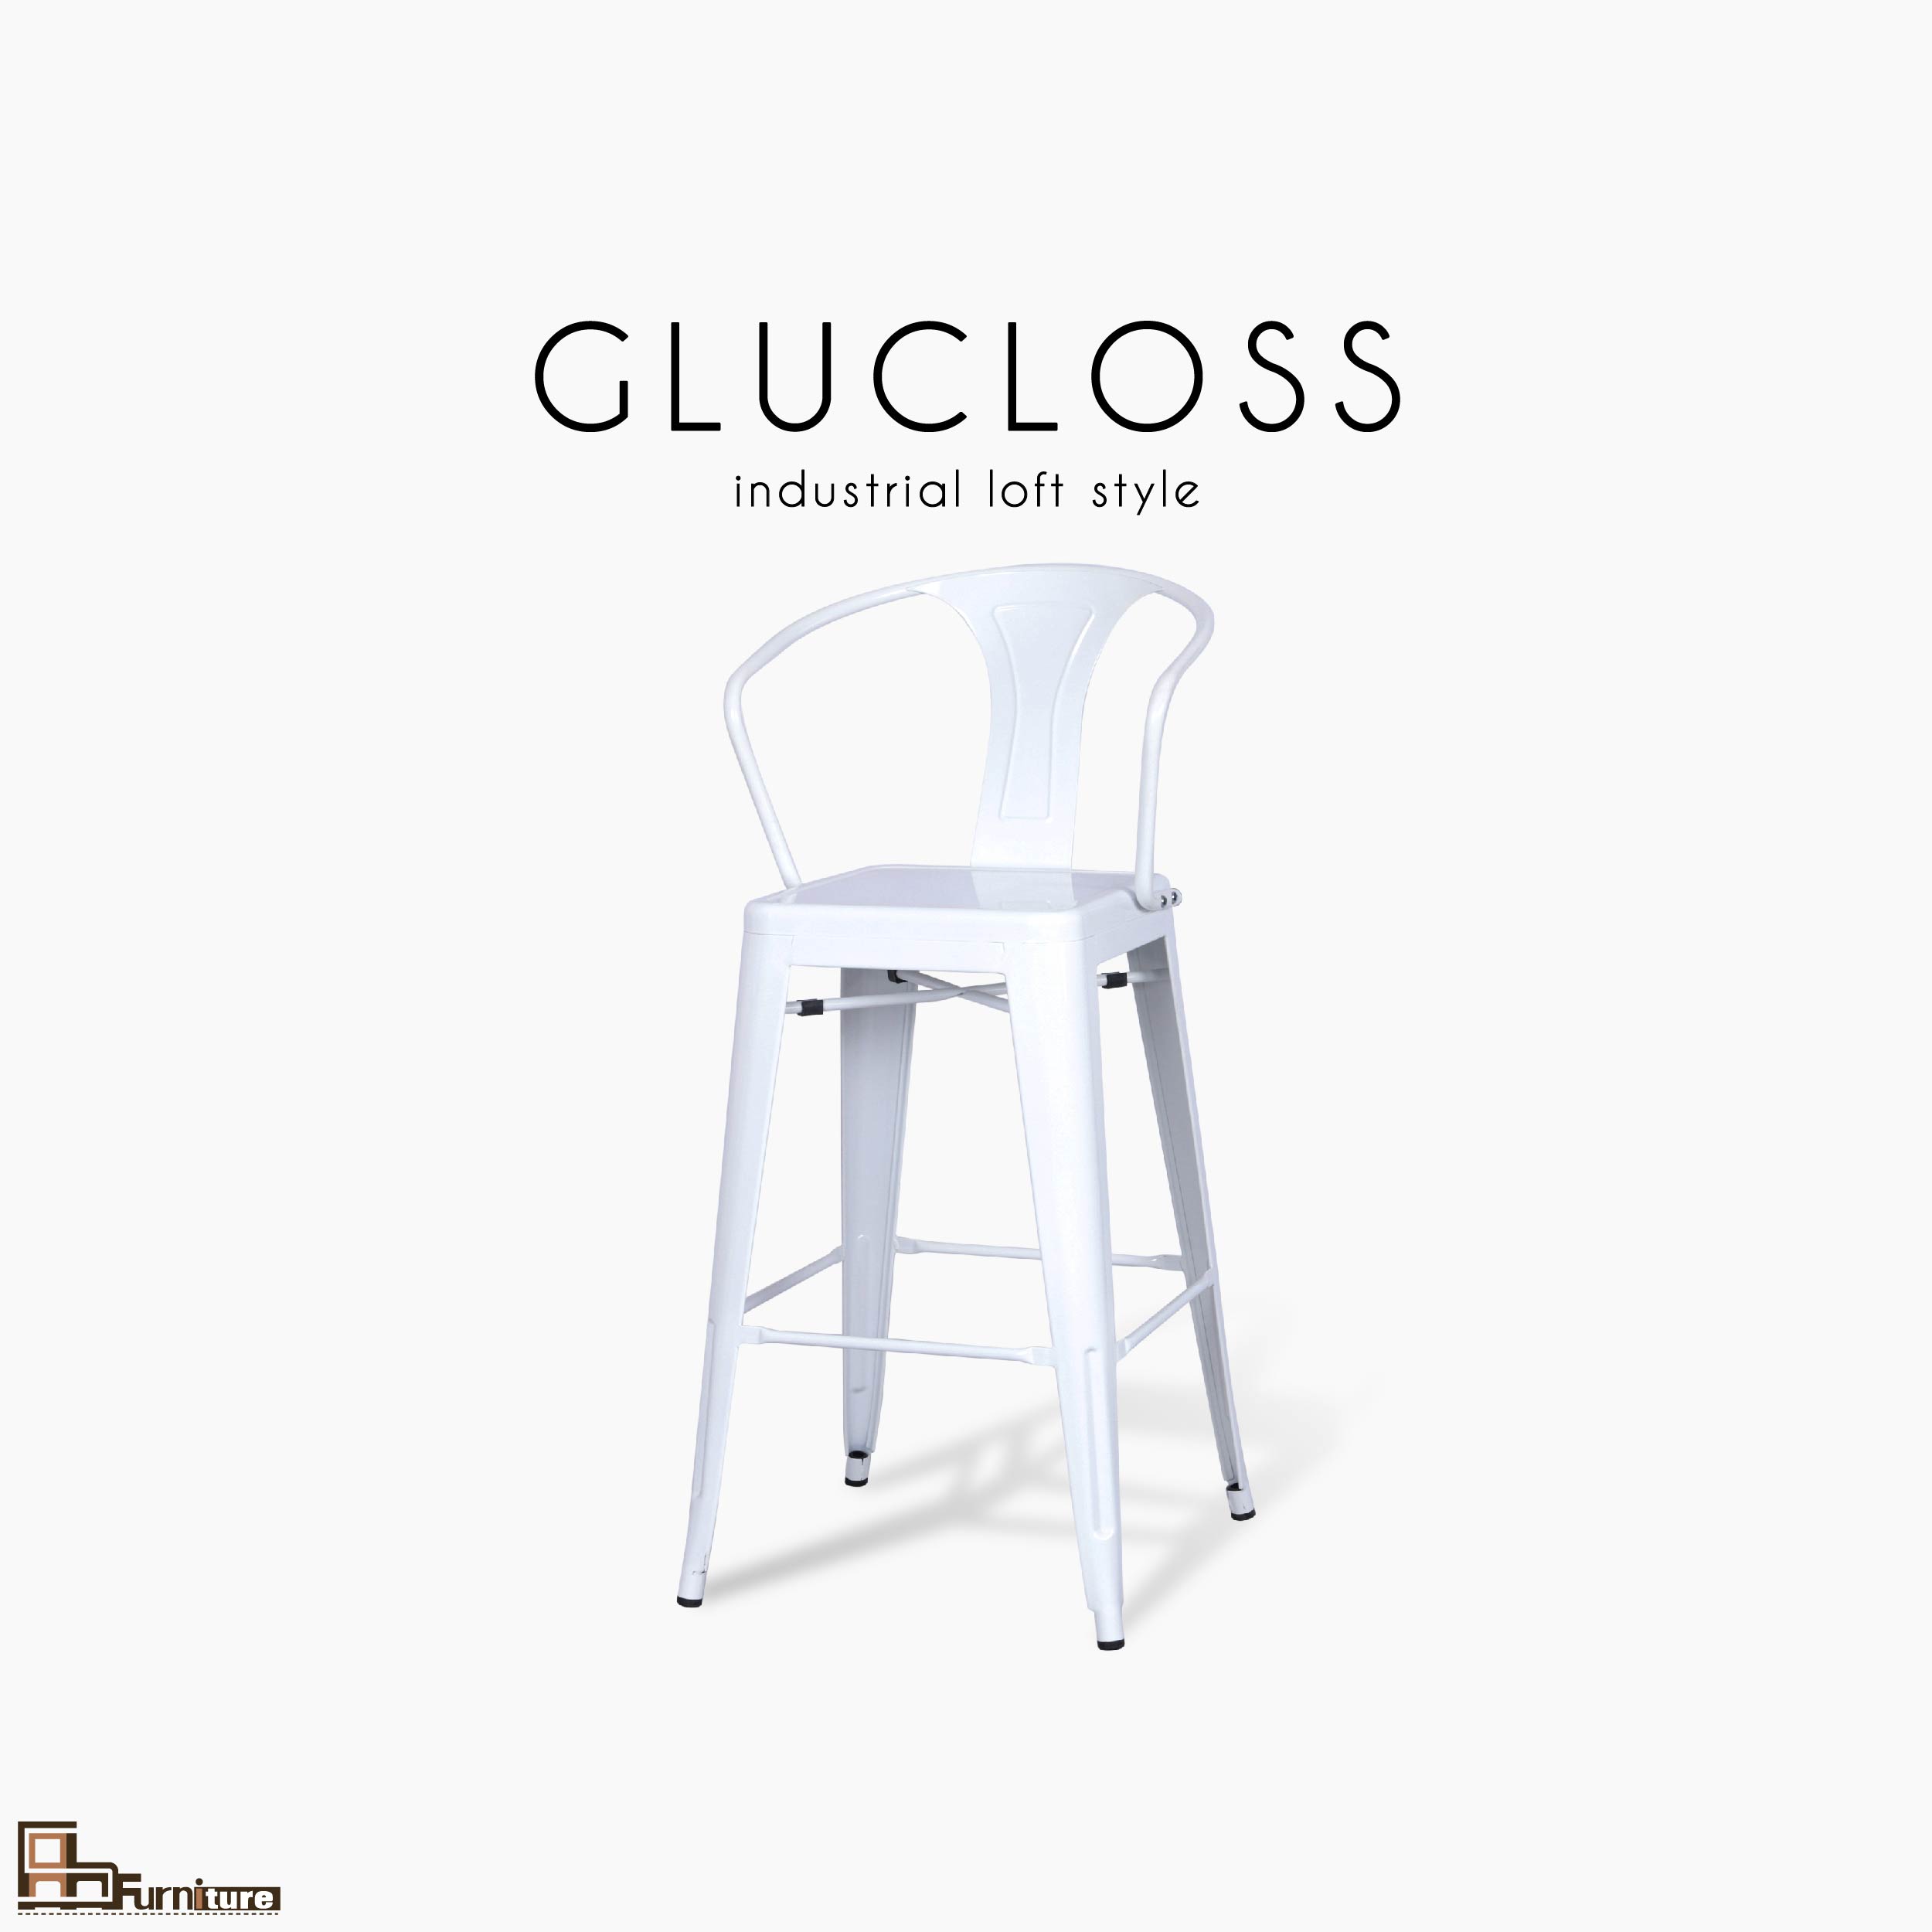 ASFURNITUREHOME / GLUCLOSS (กลูโคส) เก้าอี้บาร์ โครงขาและเบาะเหล็ก